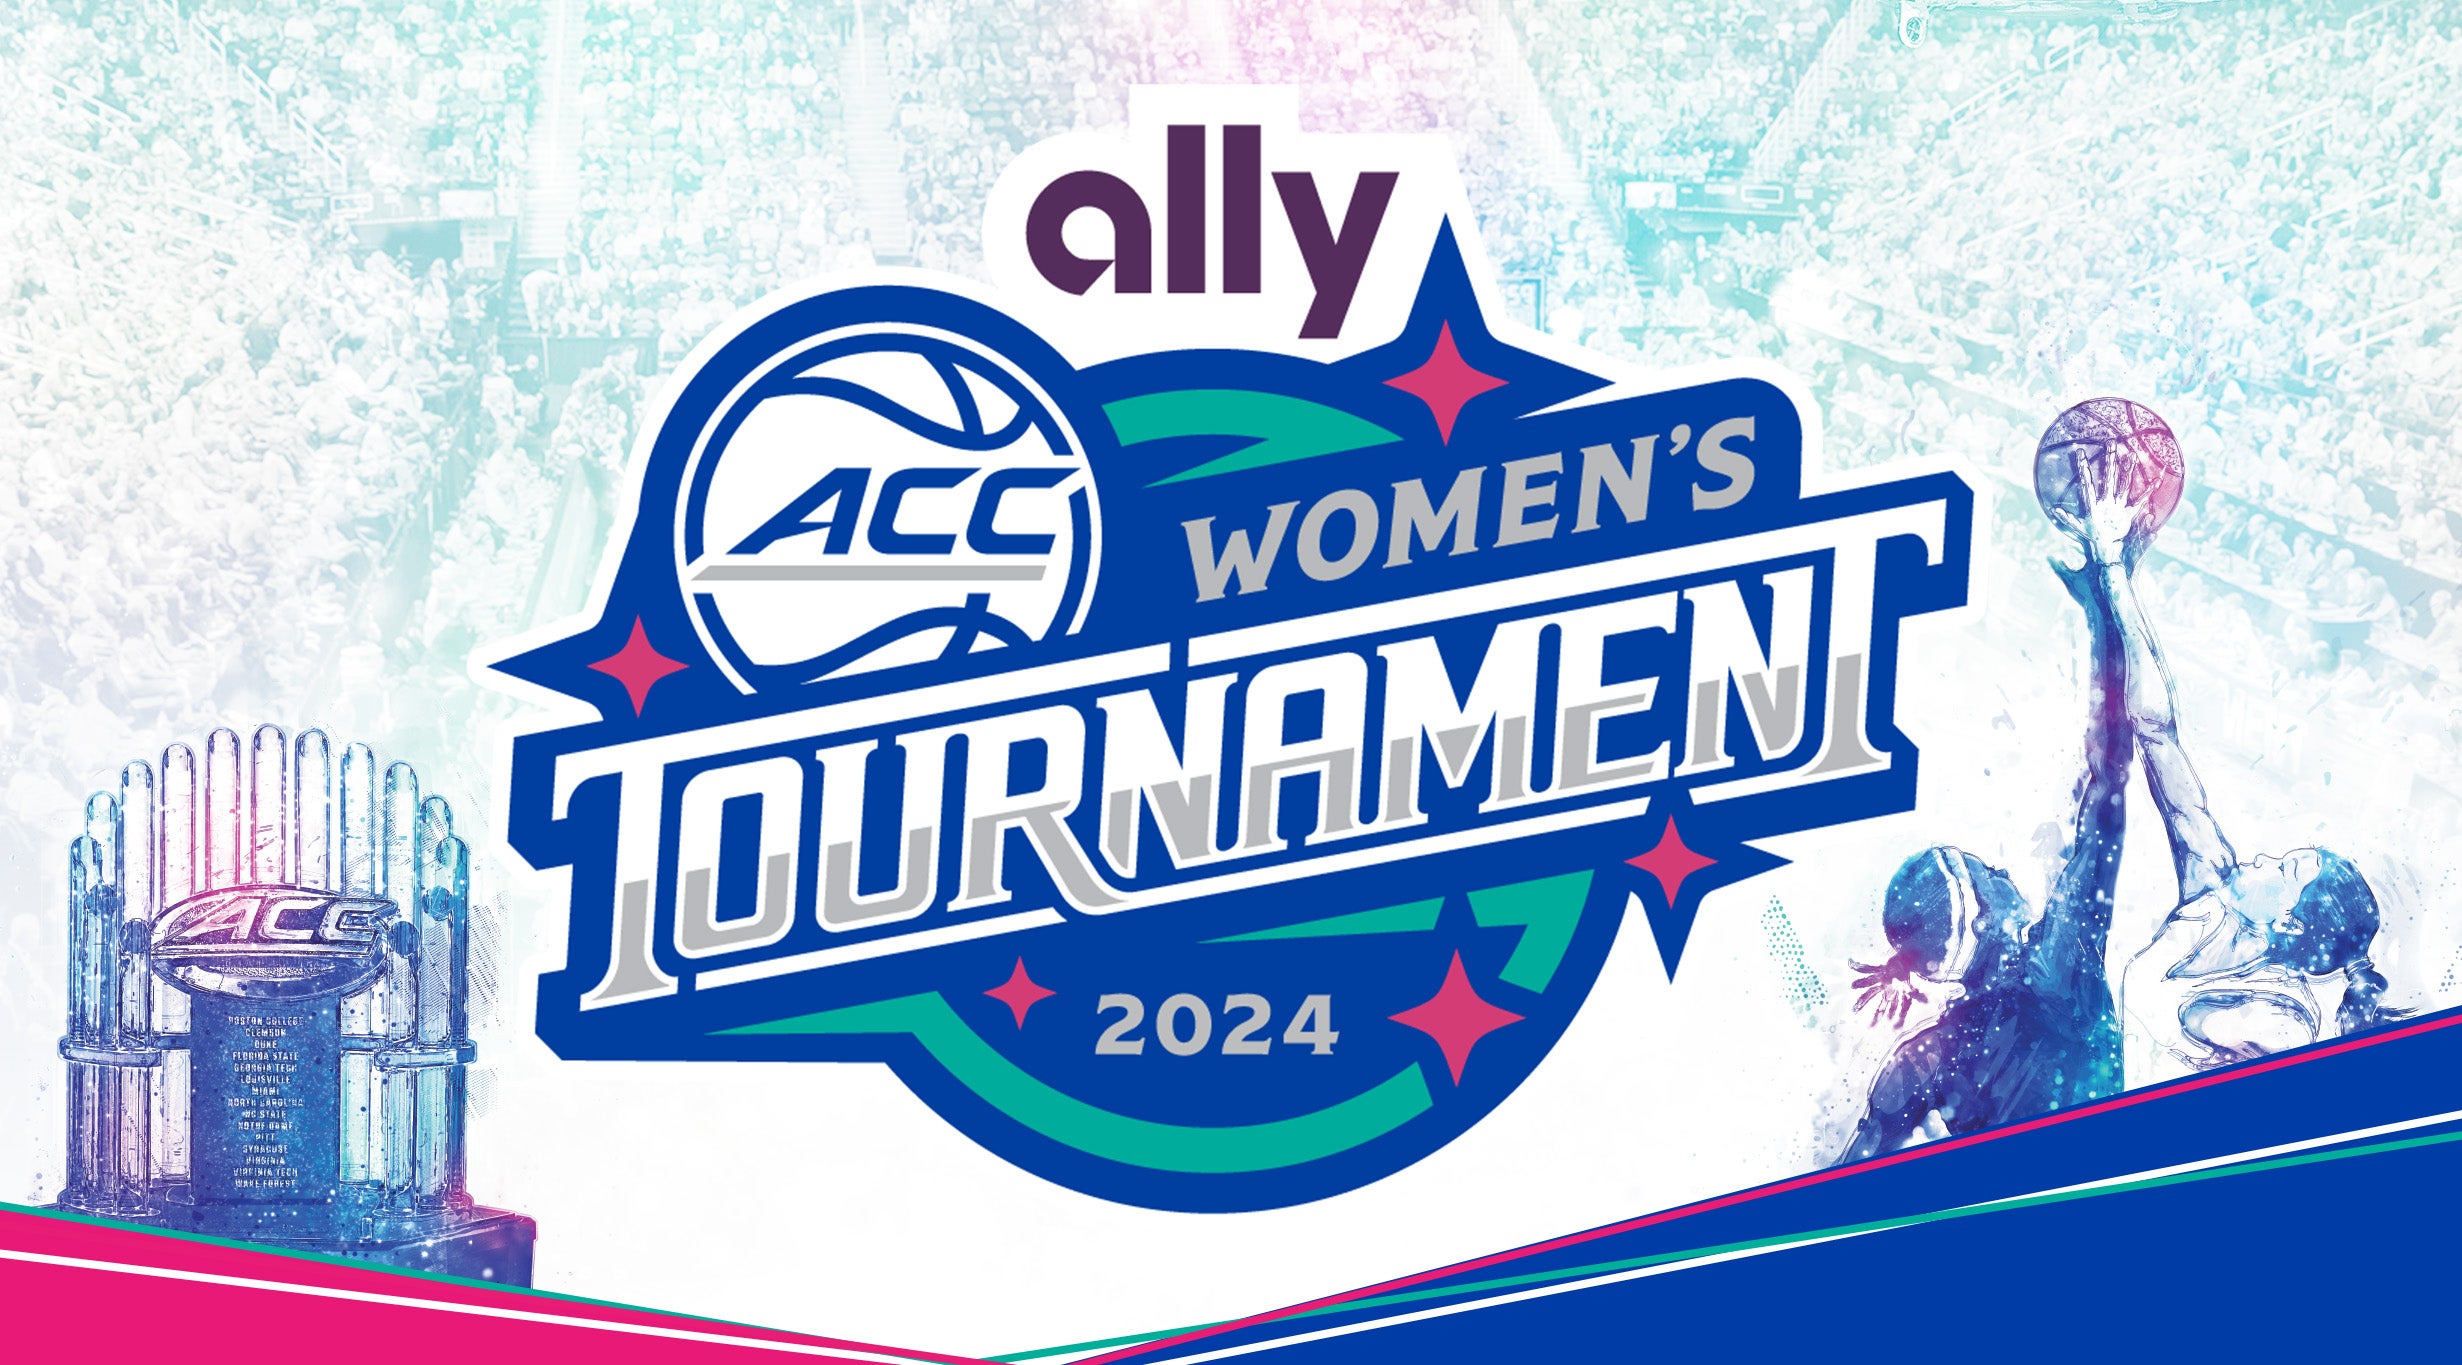 Ally ACC Womens Basketball Tournament Session 5 in Greensboro promo photo for Venue presale offer code